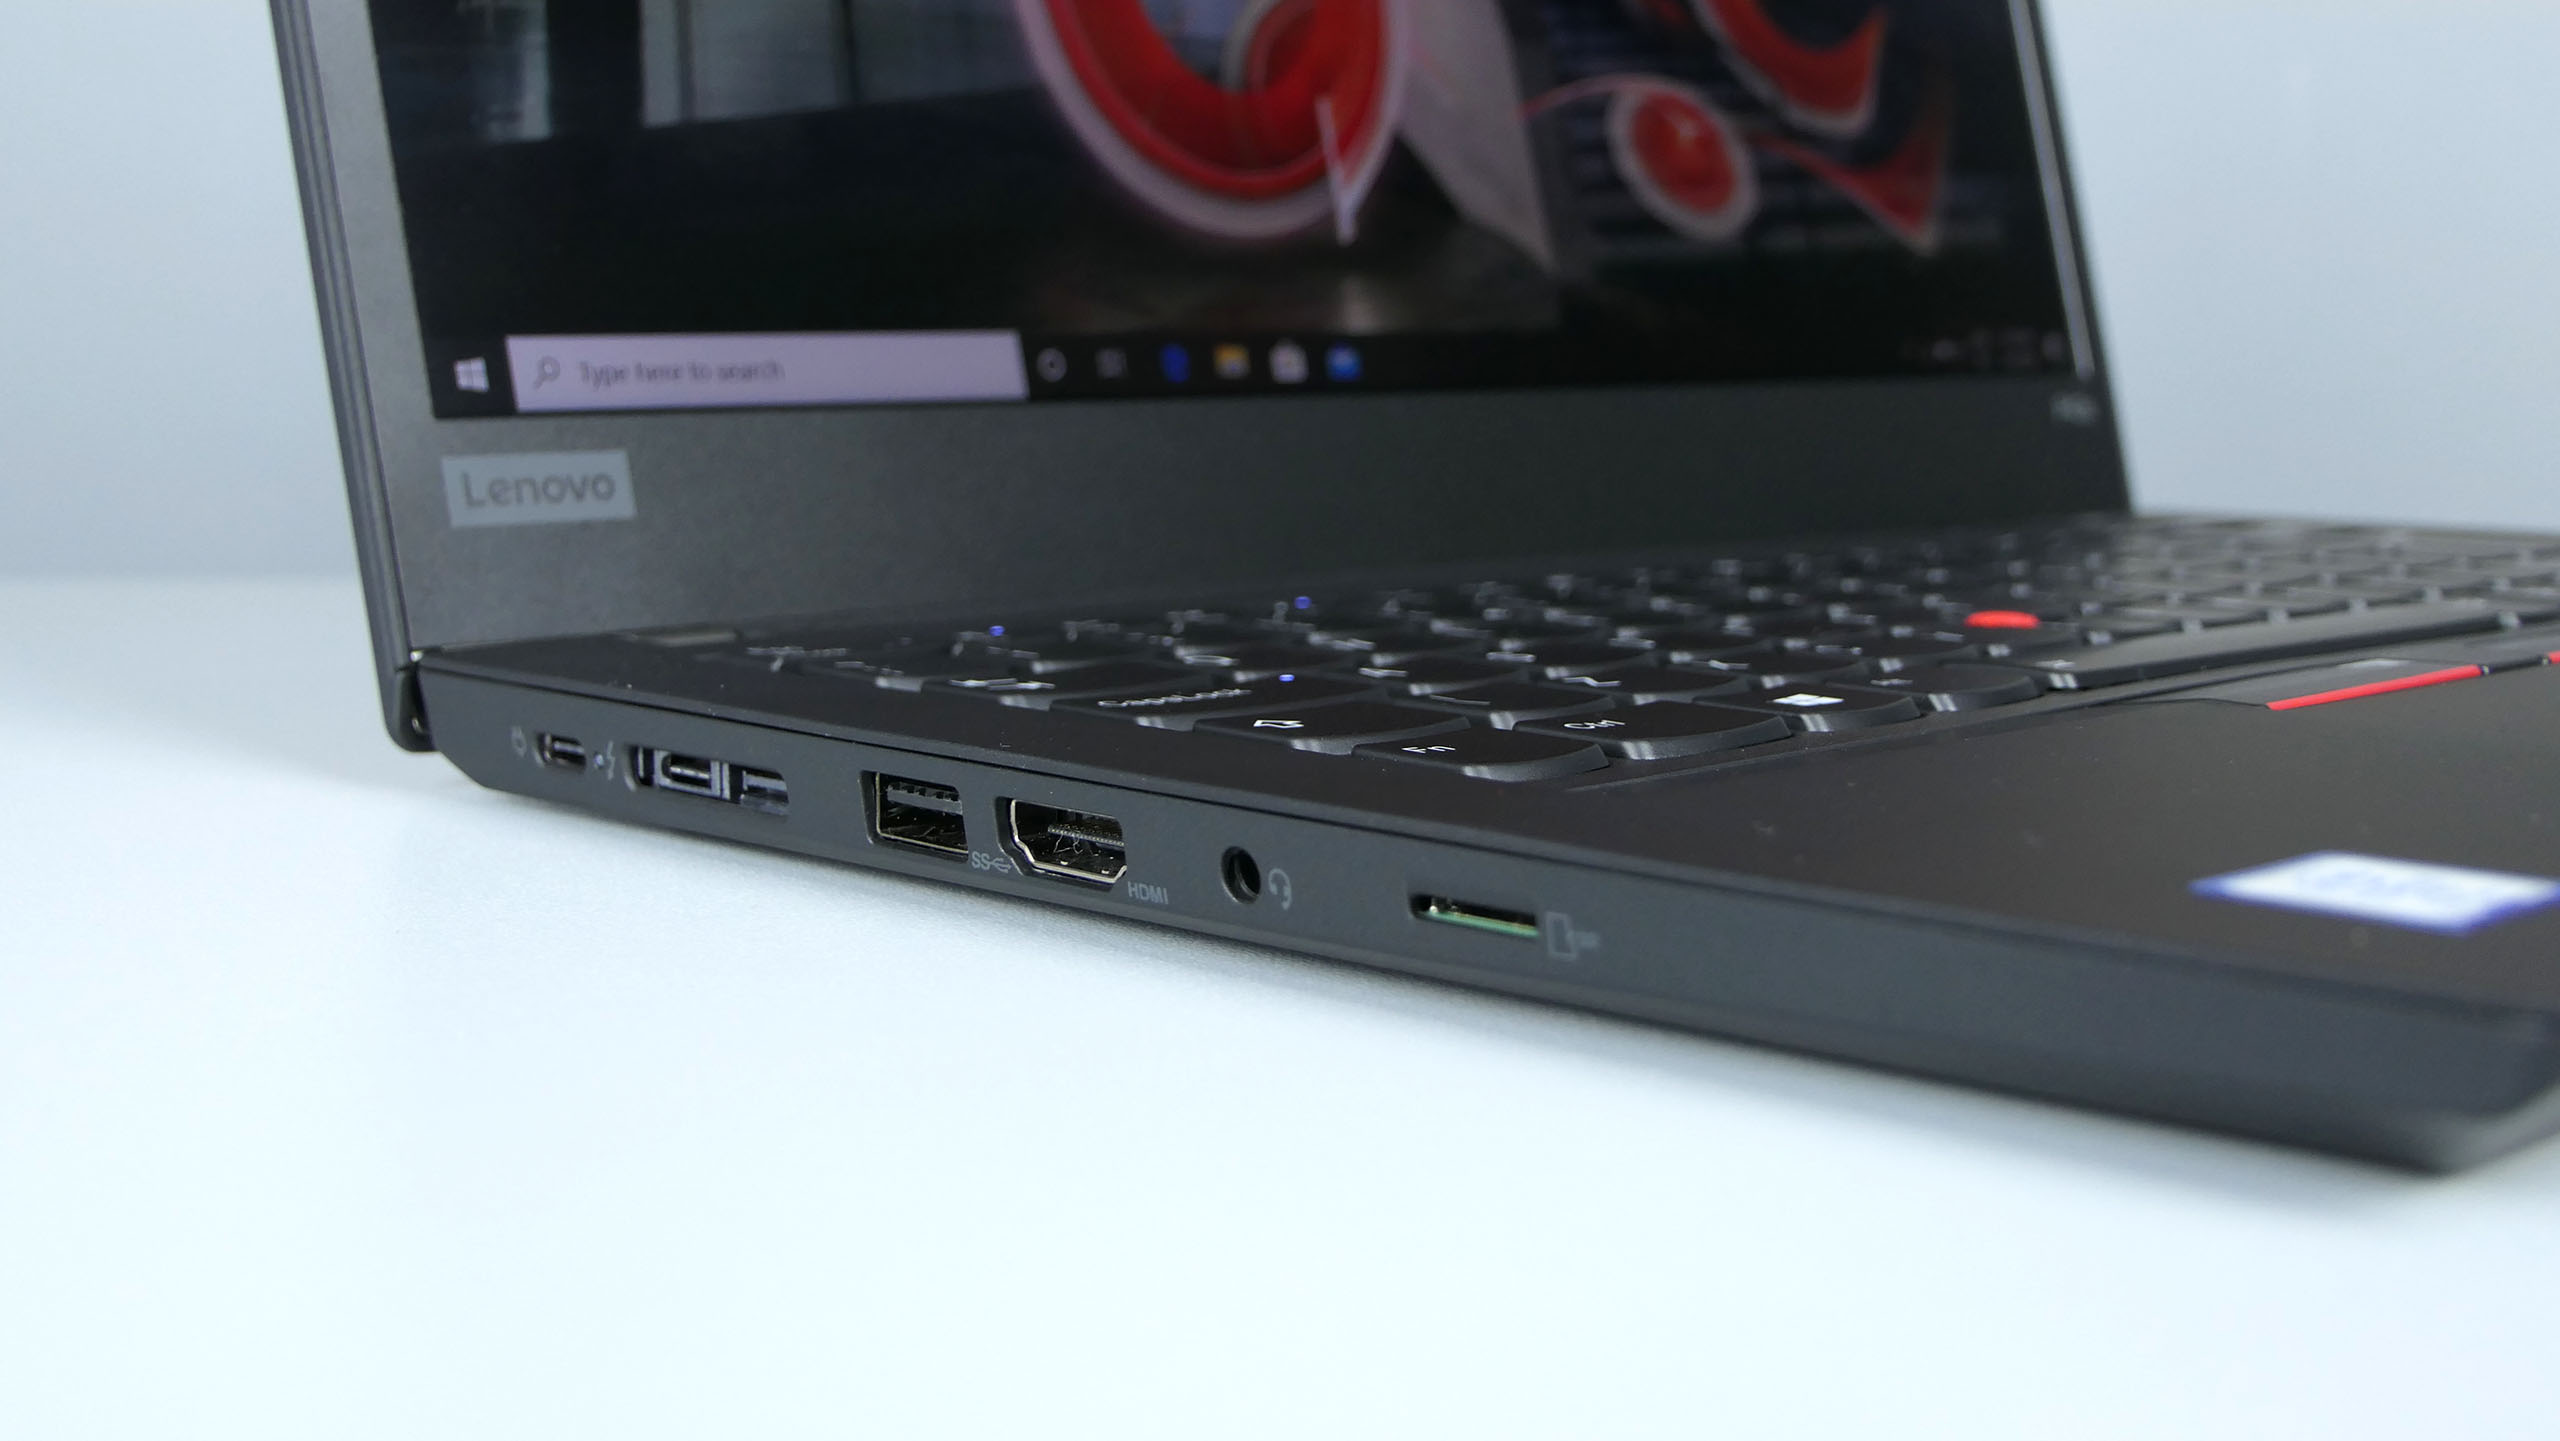 Lenovo ThinkPad P43s - porty na lewym boku: USB typu C, Thunderbolt 3, gniazdo dokowania, USB 3.0, HDMI, audio on/off